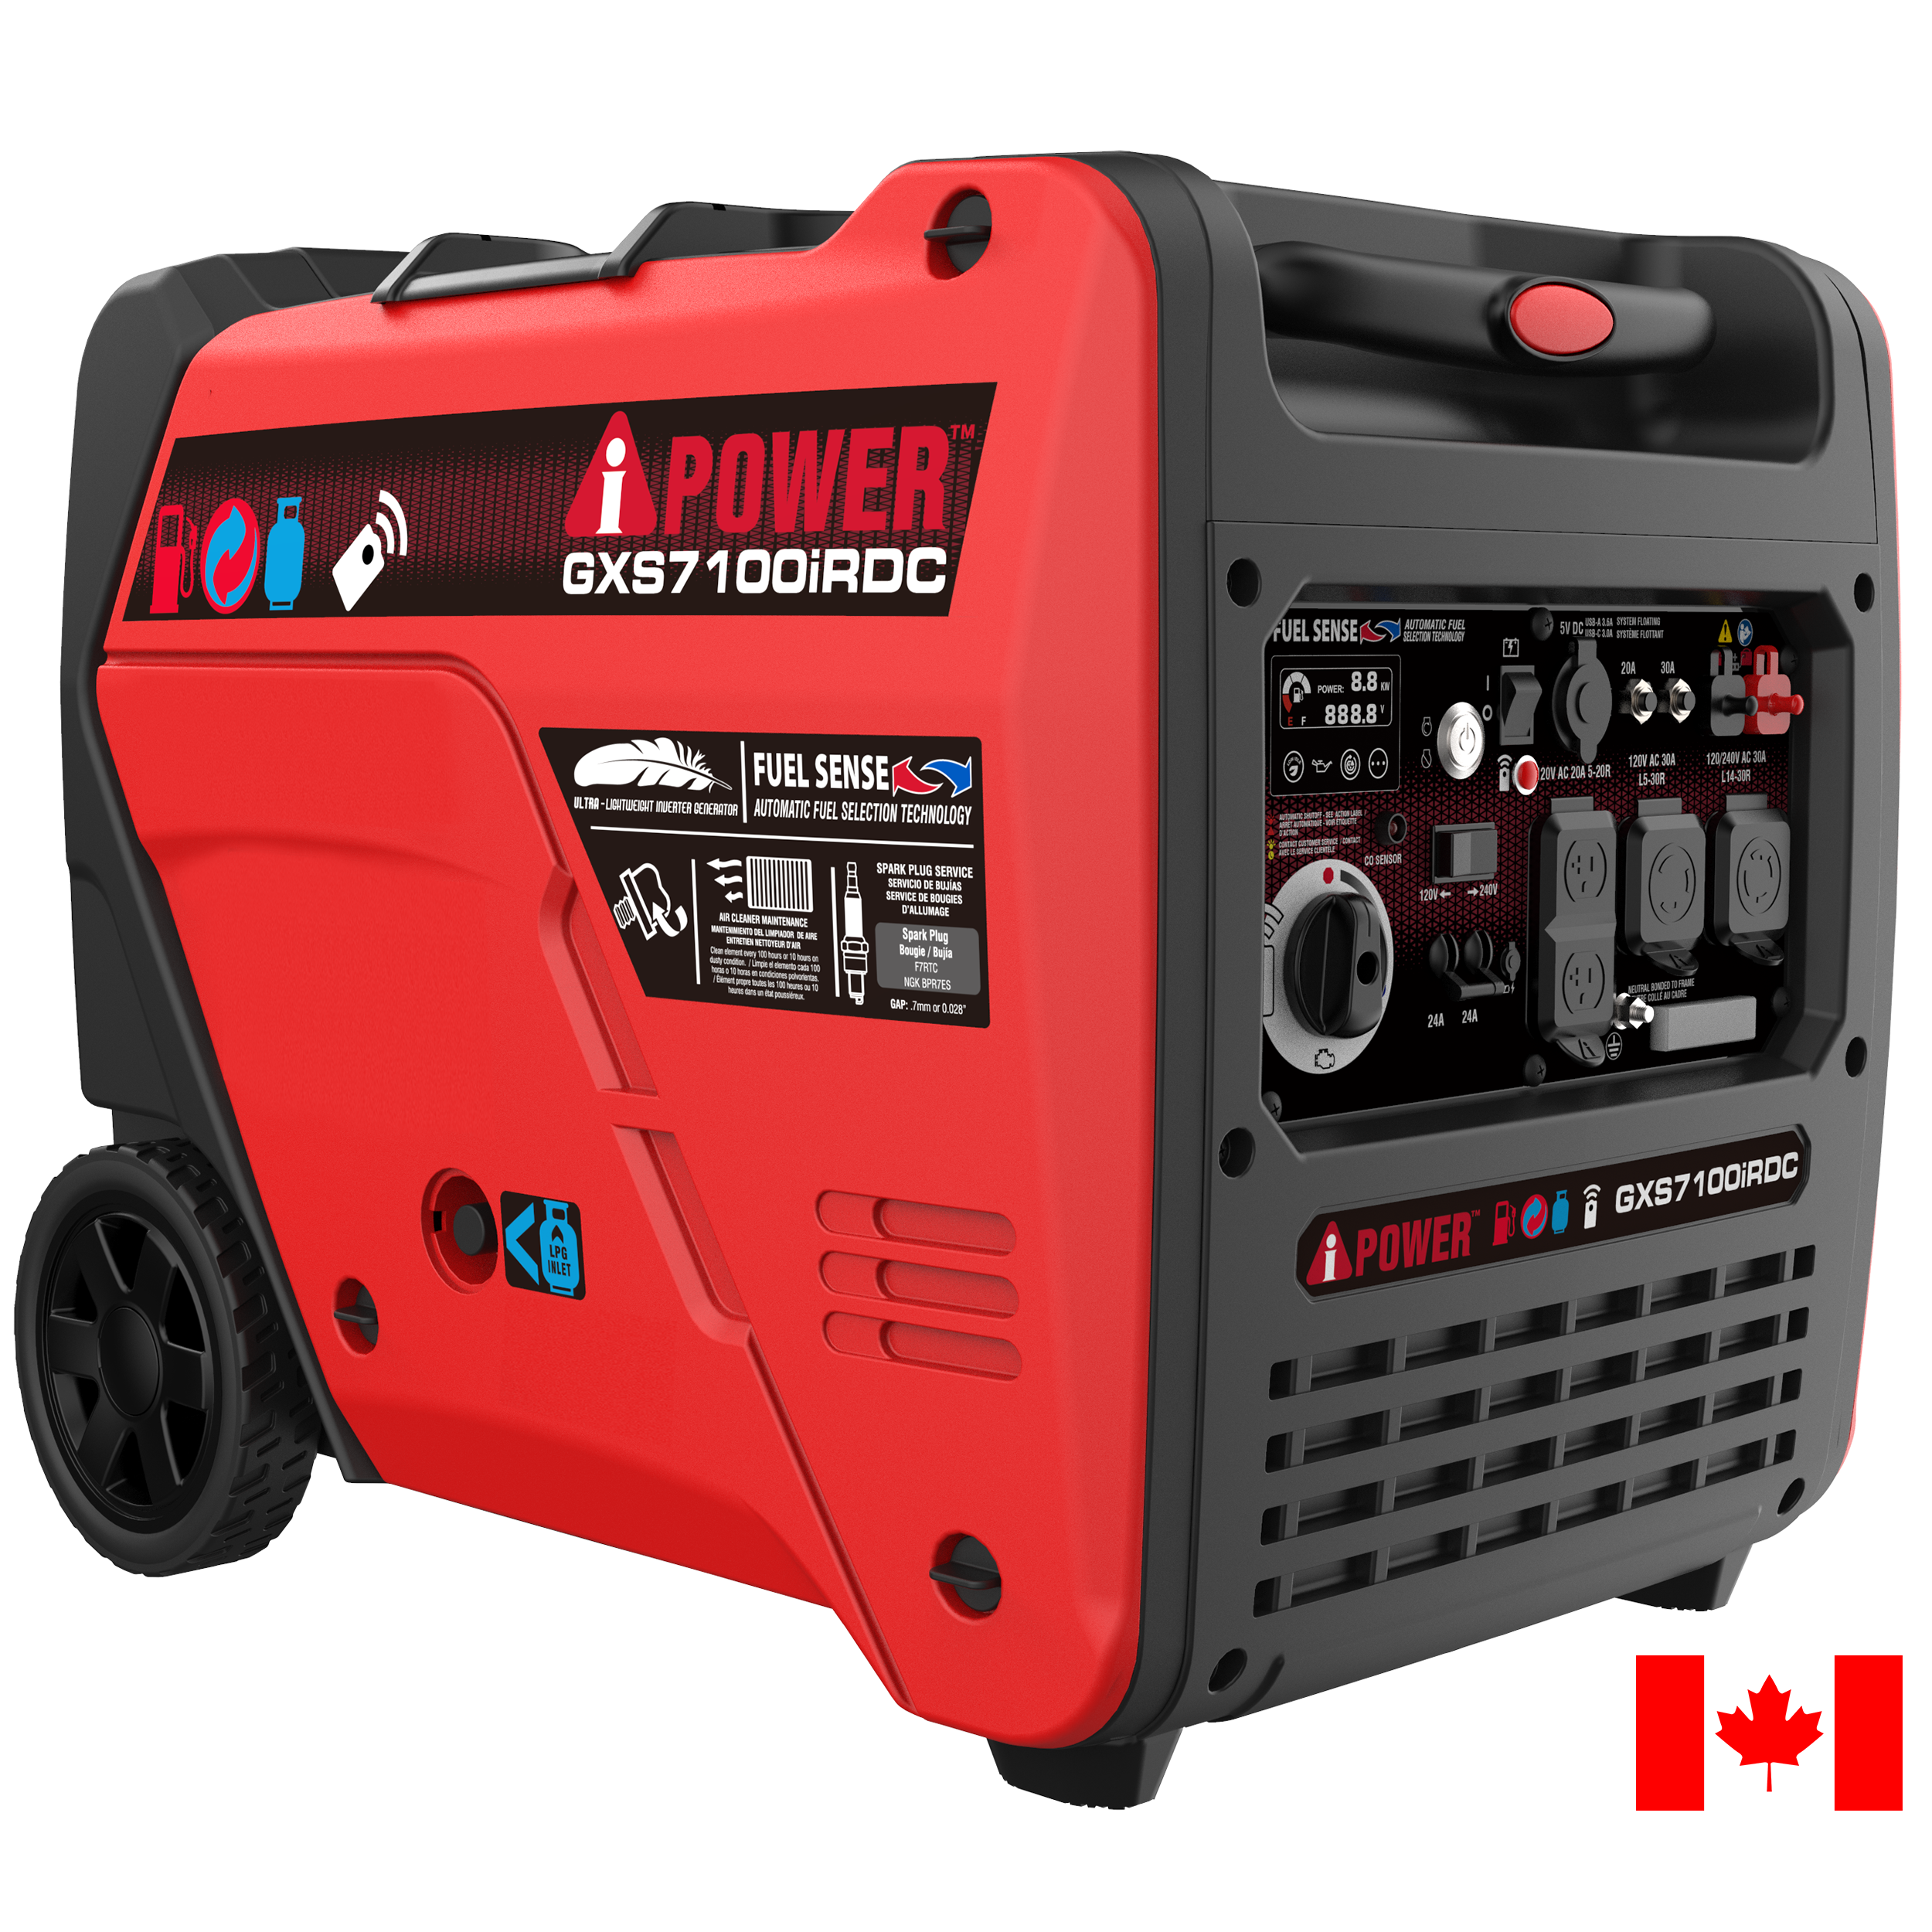 A-iPower GXS7100iRD 7100W Dual Fuel Inverter Generator